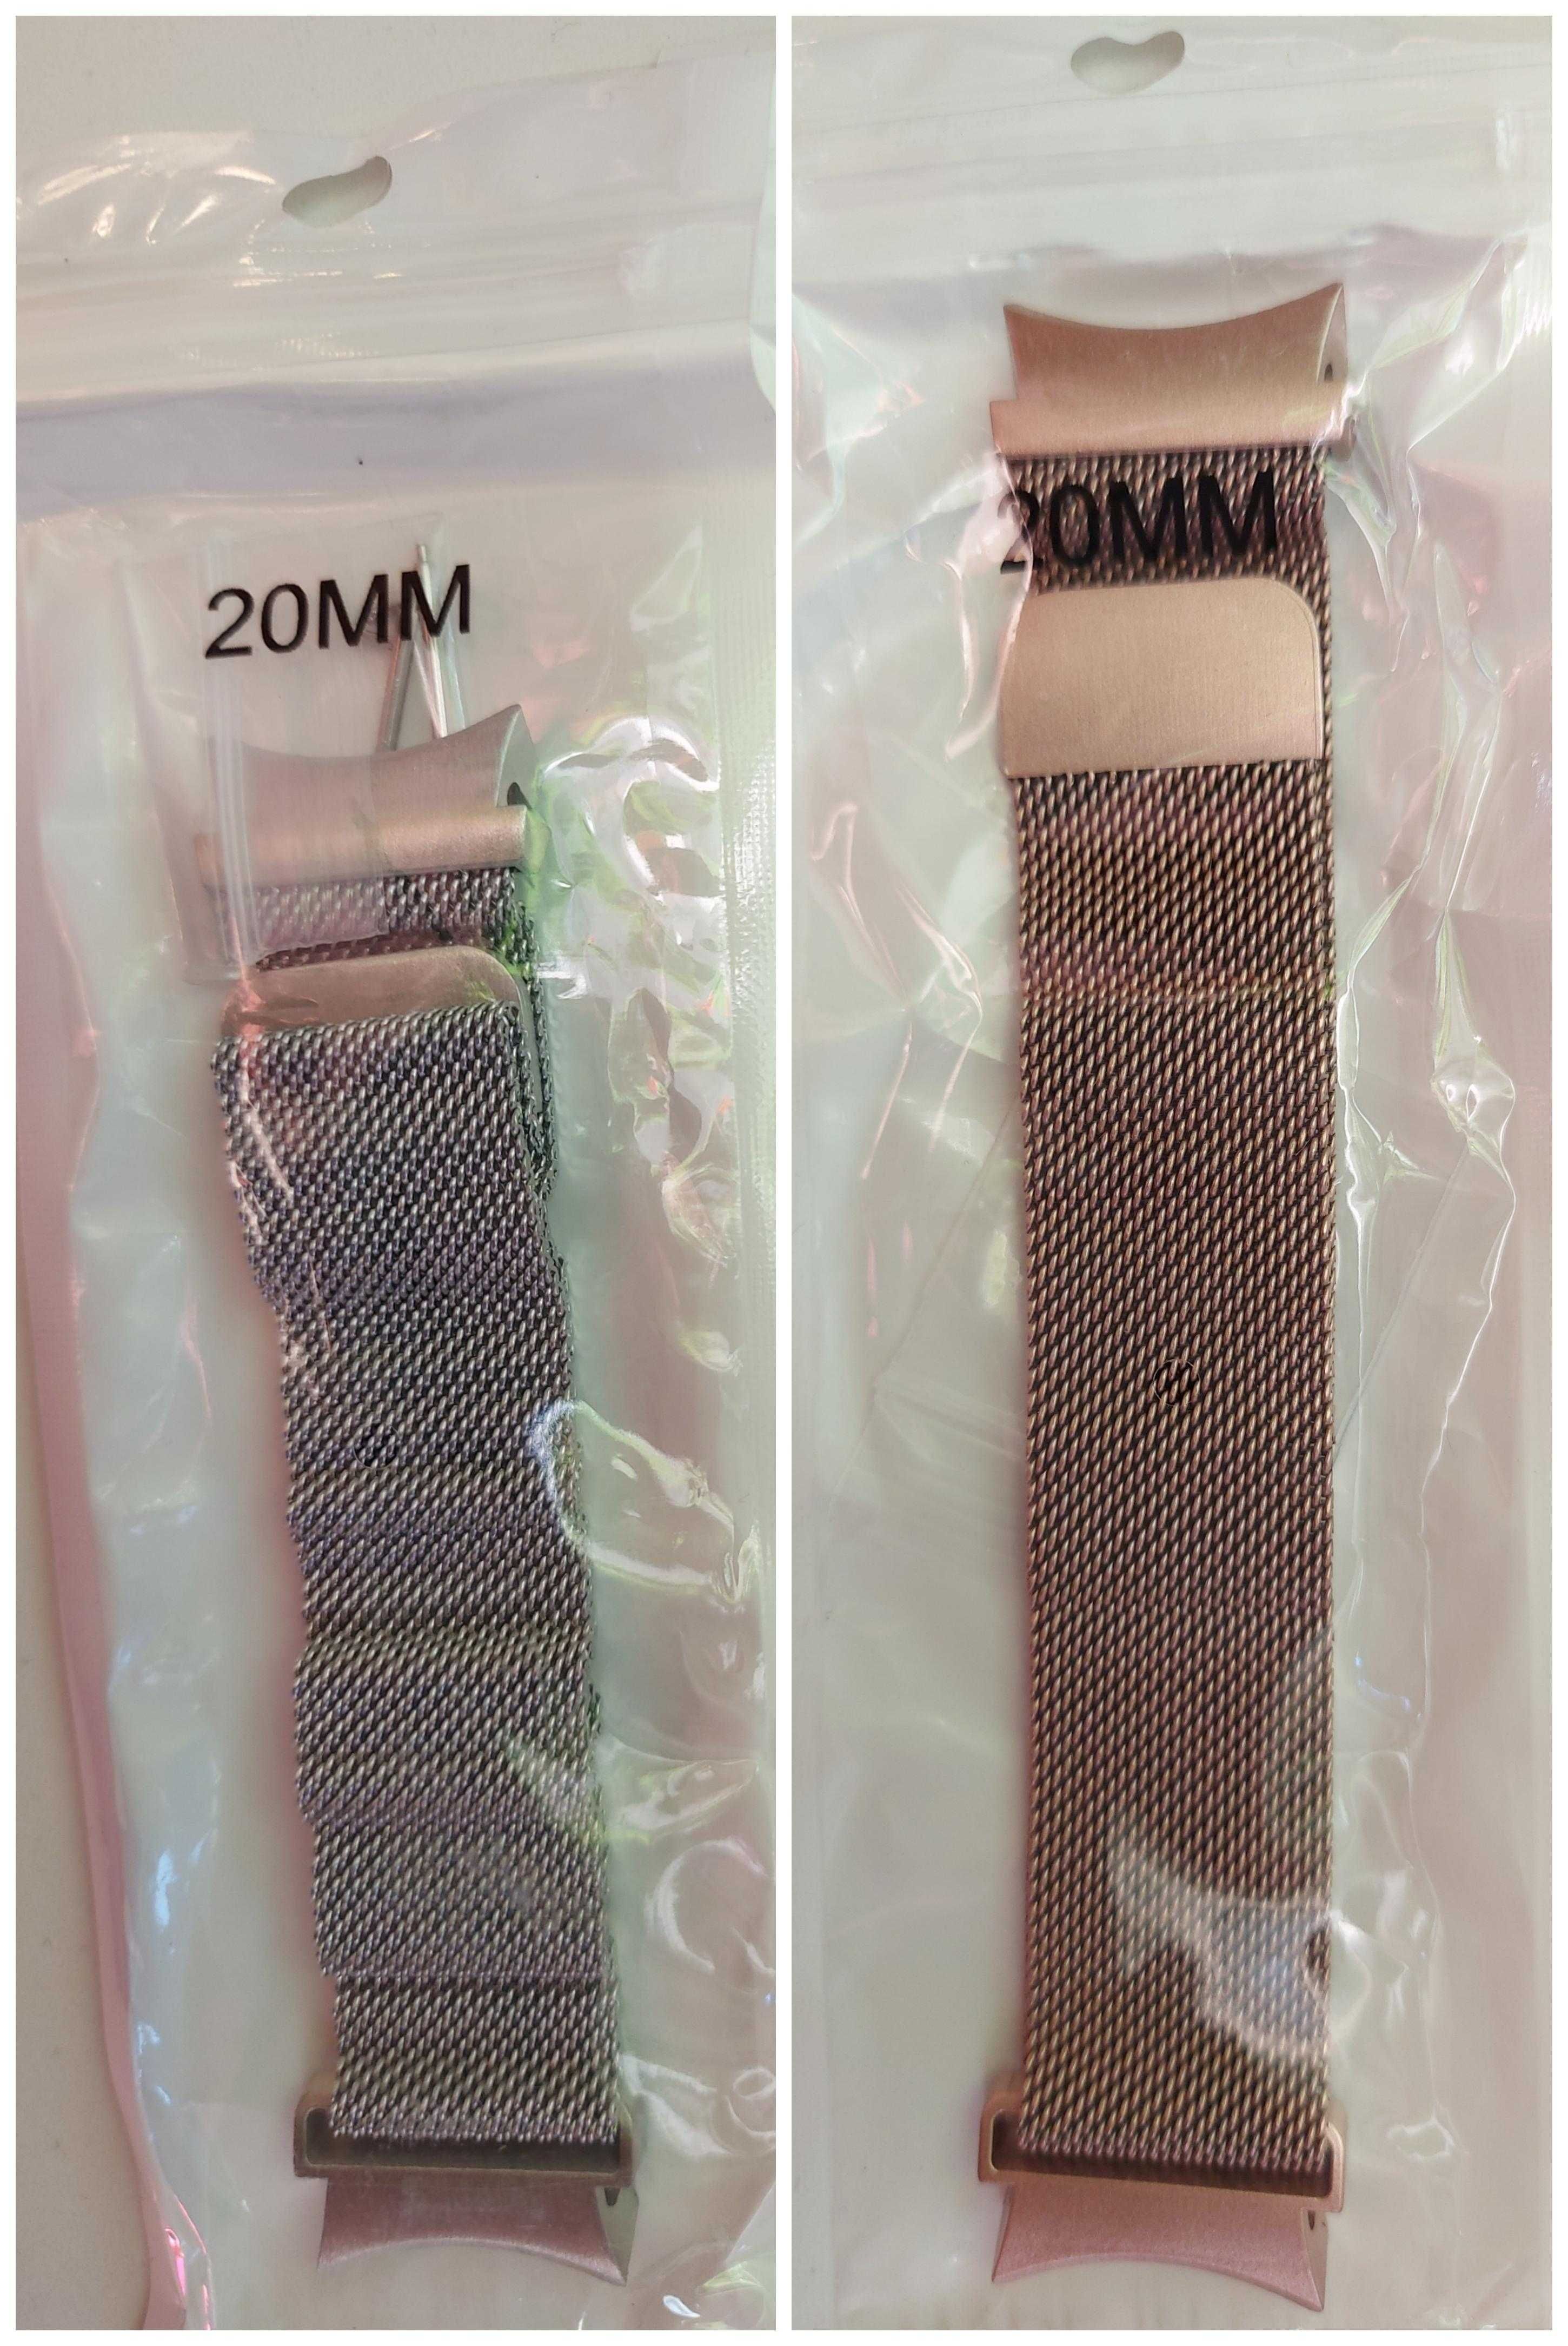 3D протектор за Samsung Galaxy Watch 5 40/44 мм.